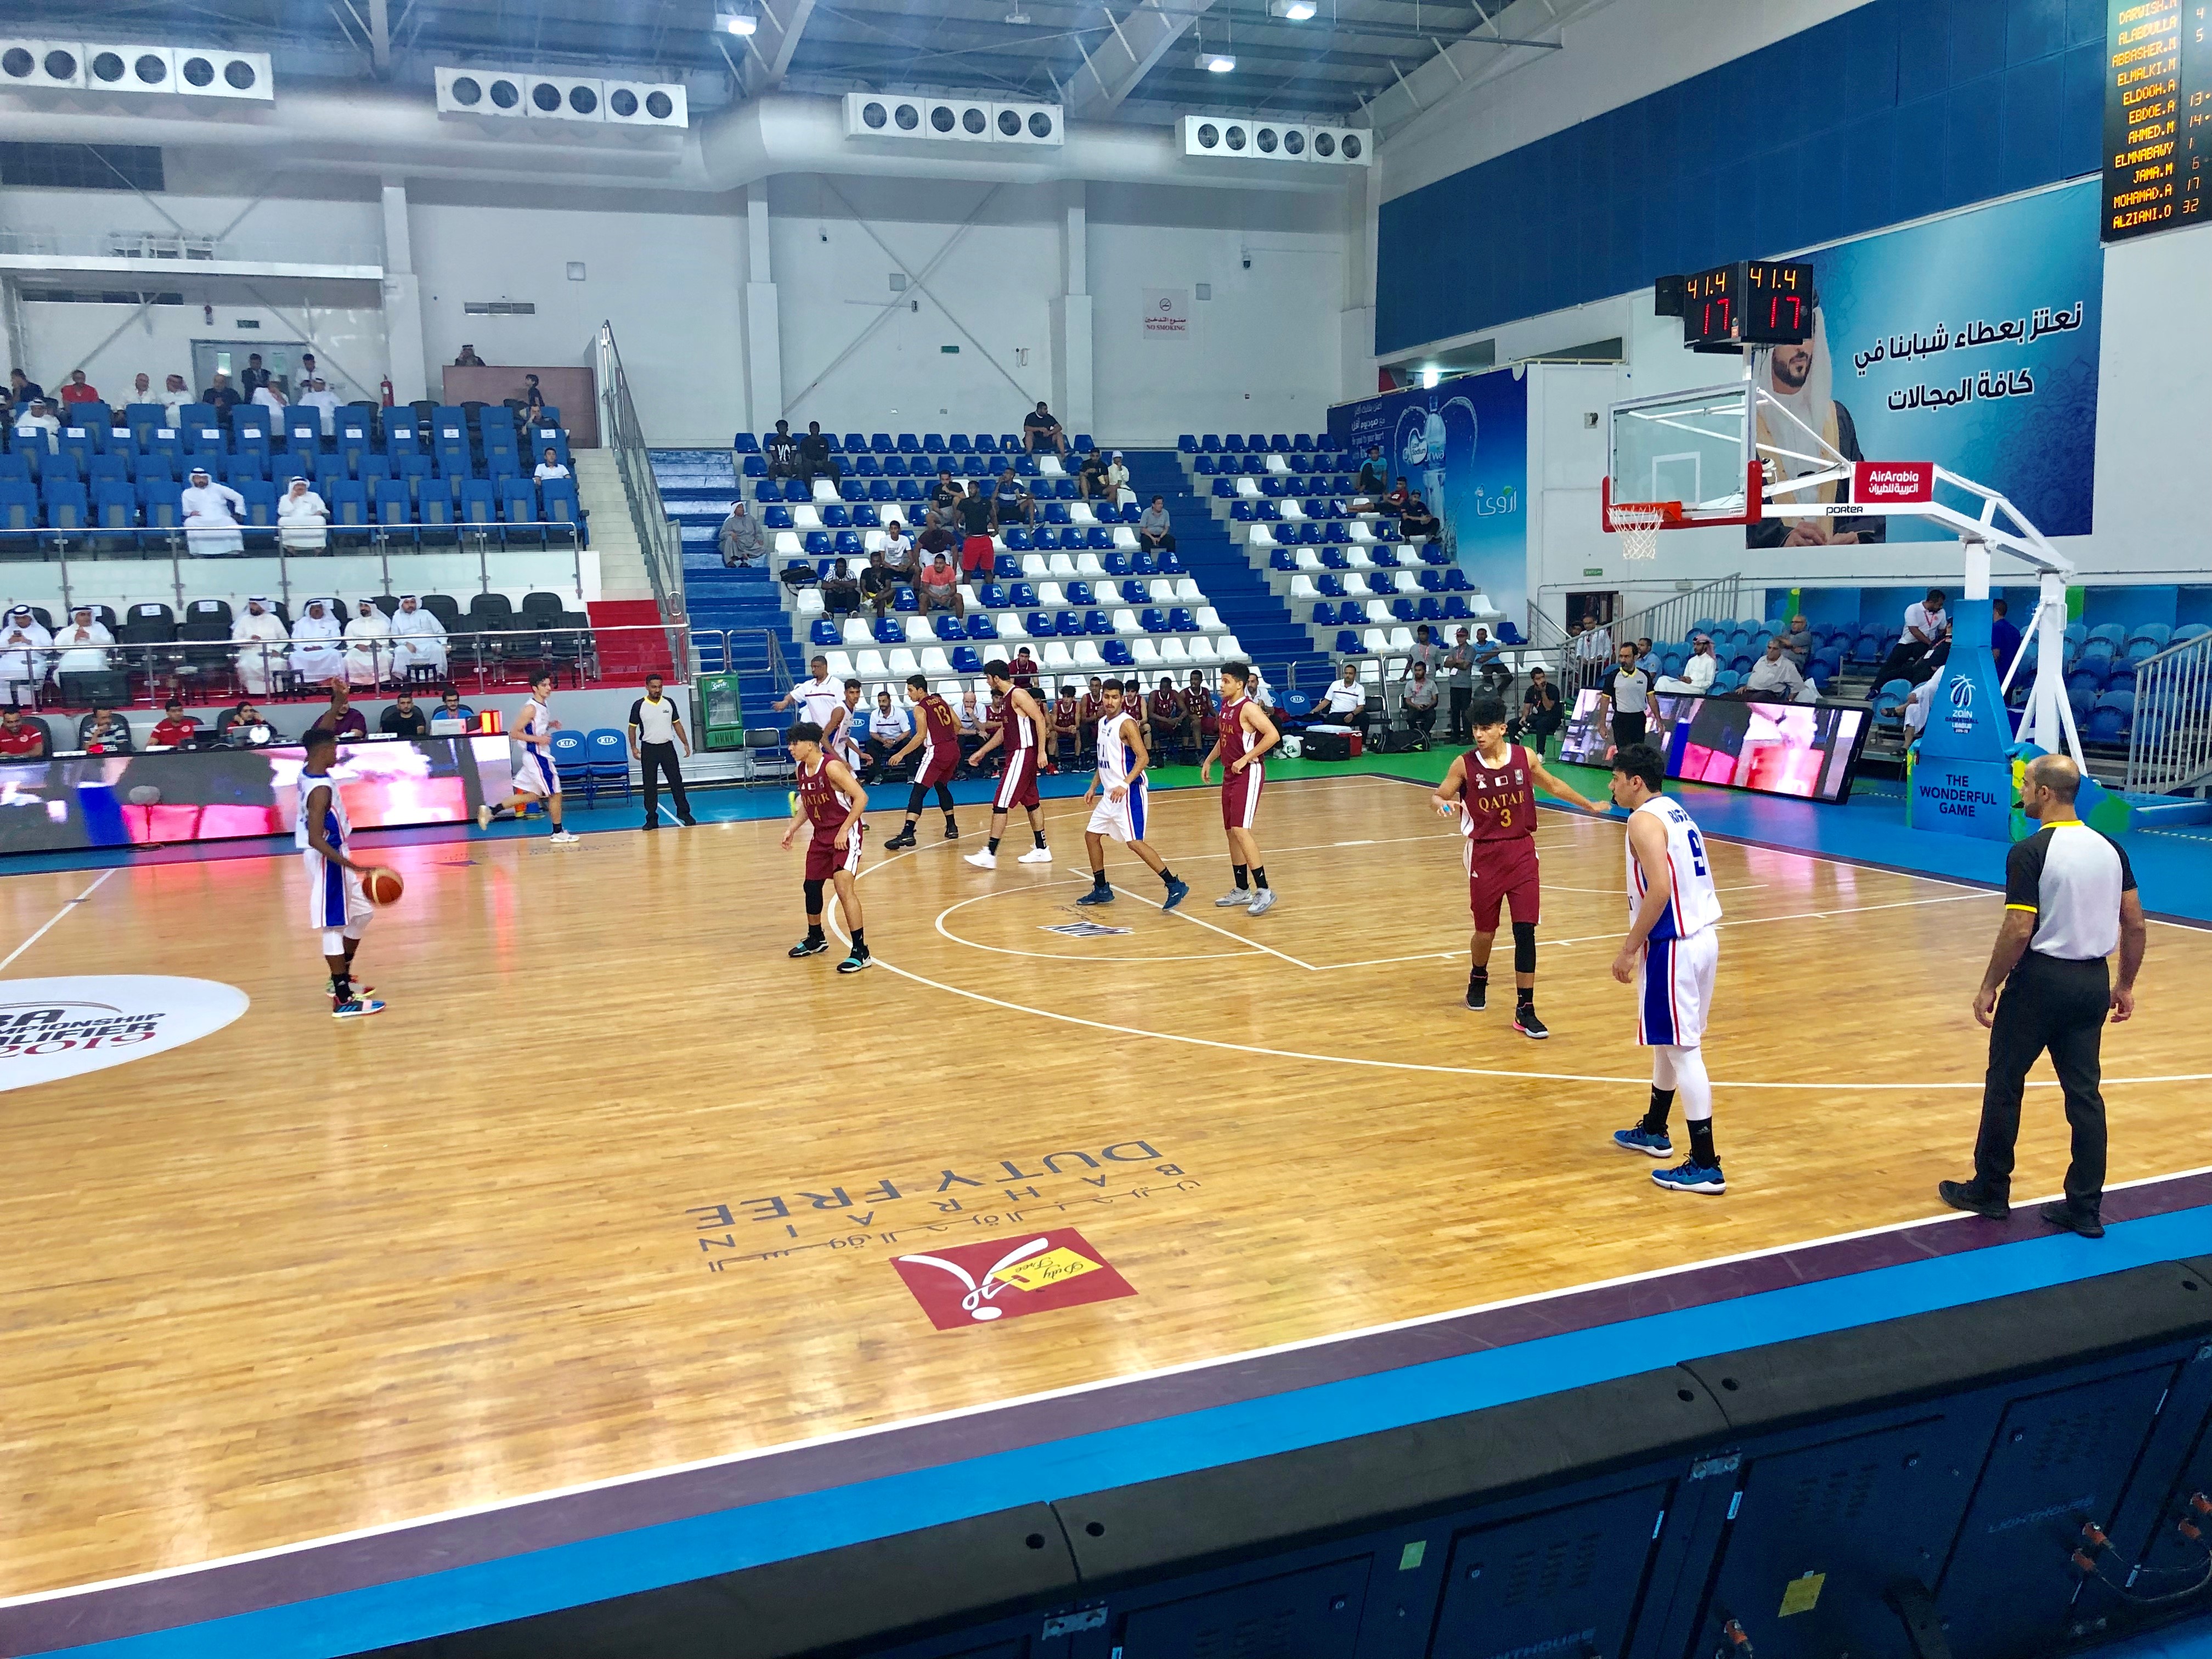 Kuwait Vs Qatar at the Gulf Basketball Association Qualifiers